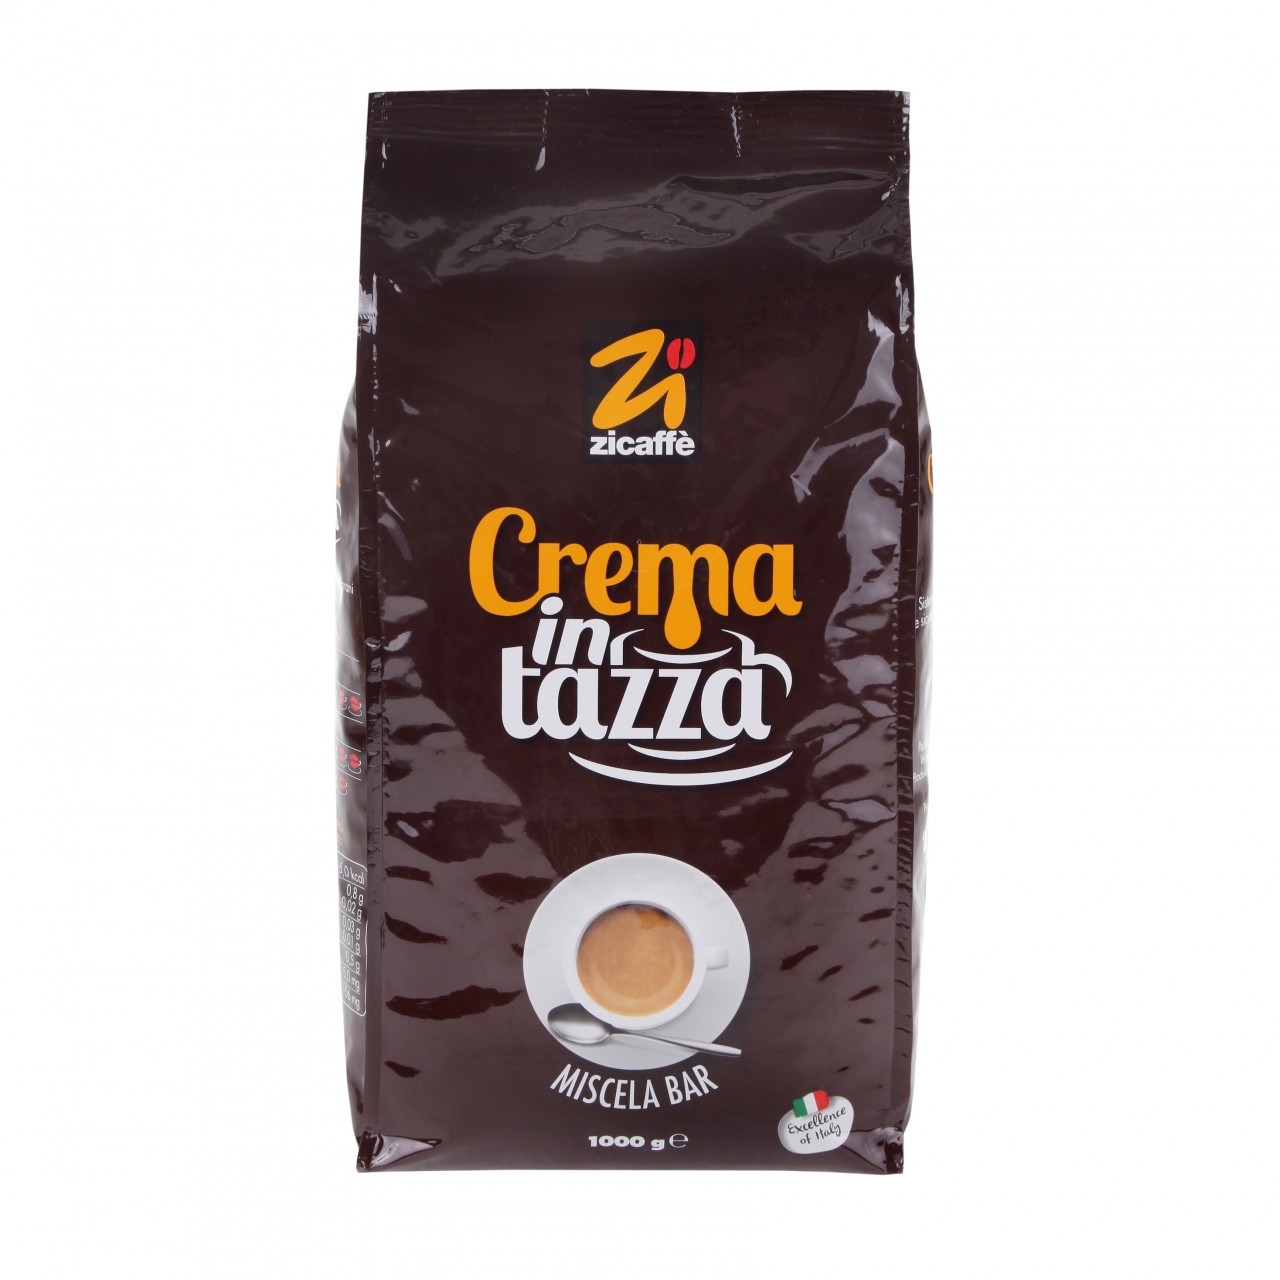 Zicaffè Crema In Tazza Miscela Bar